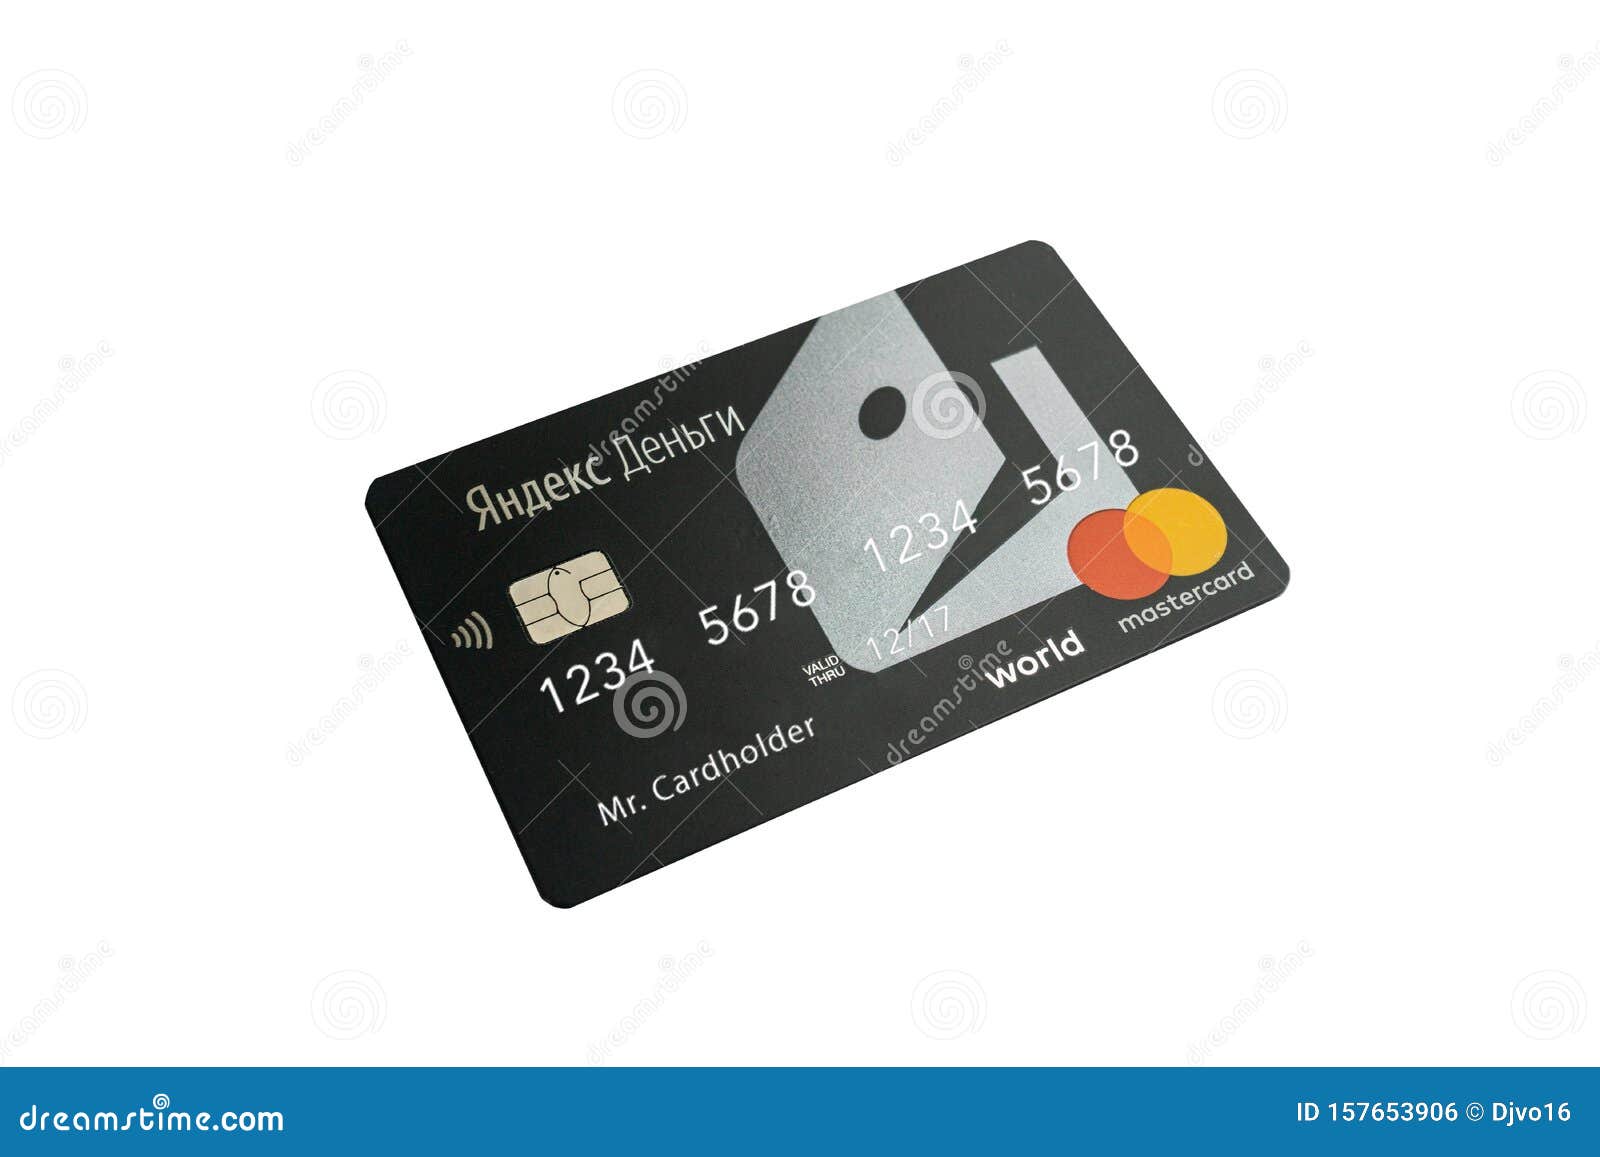 Yandex Credit Card